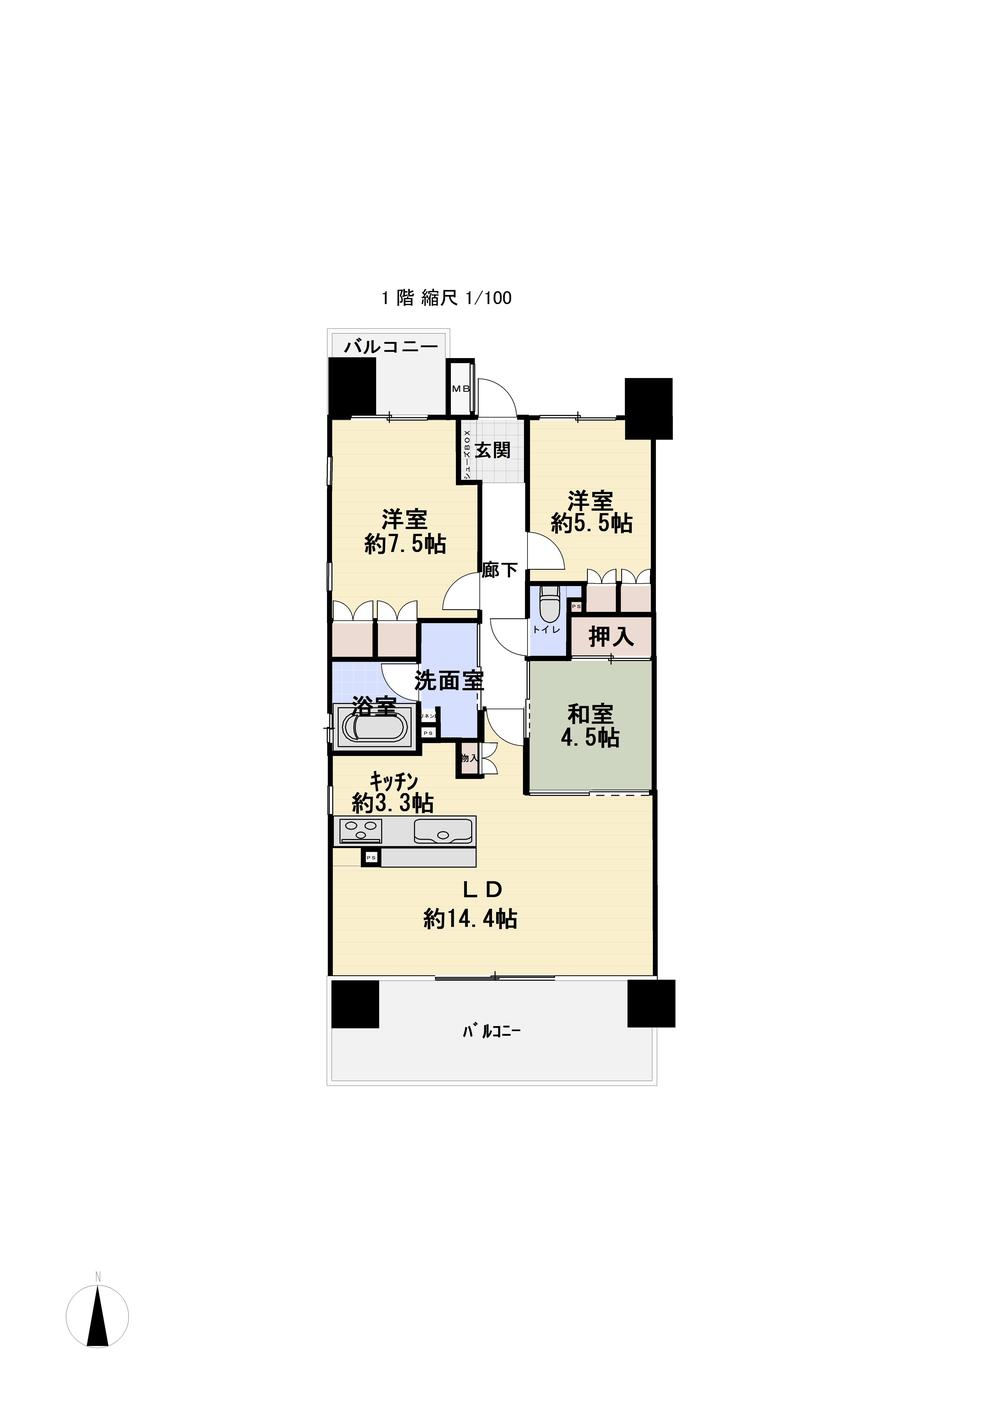 Floor plan. 3LDK, Price 24,800,000 yen, Footprint 75.4 sq m , Balcony area 16.68 sq m